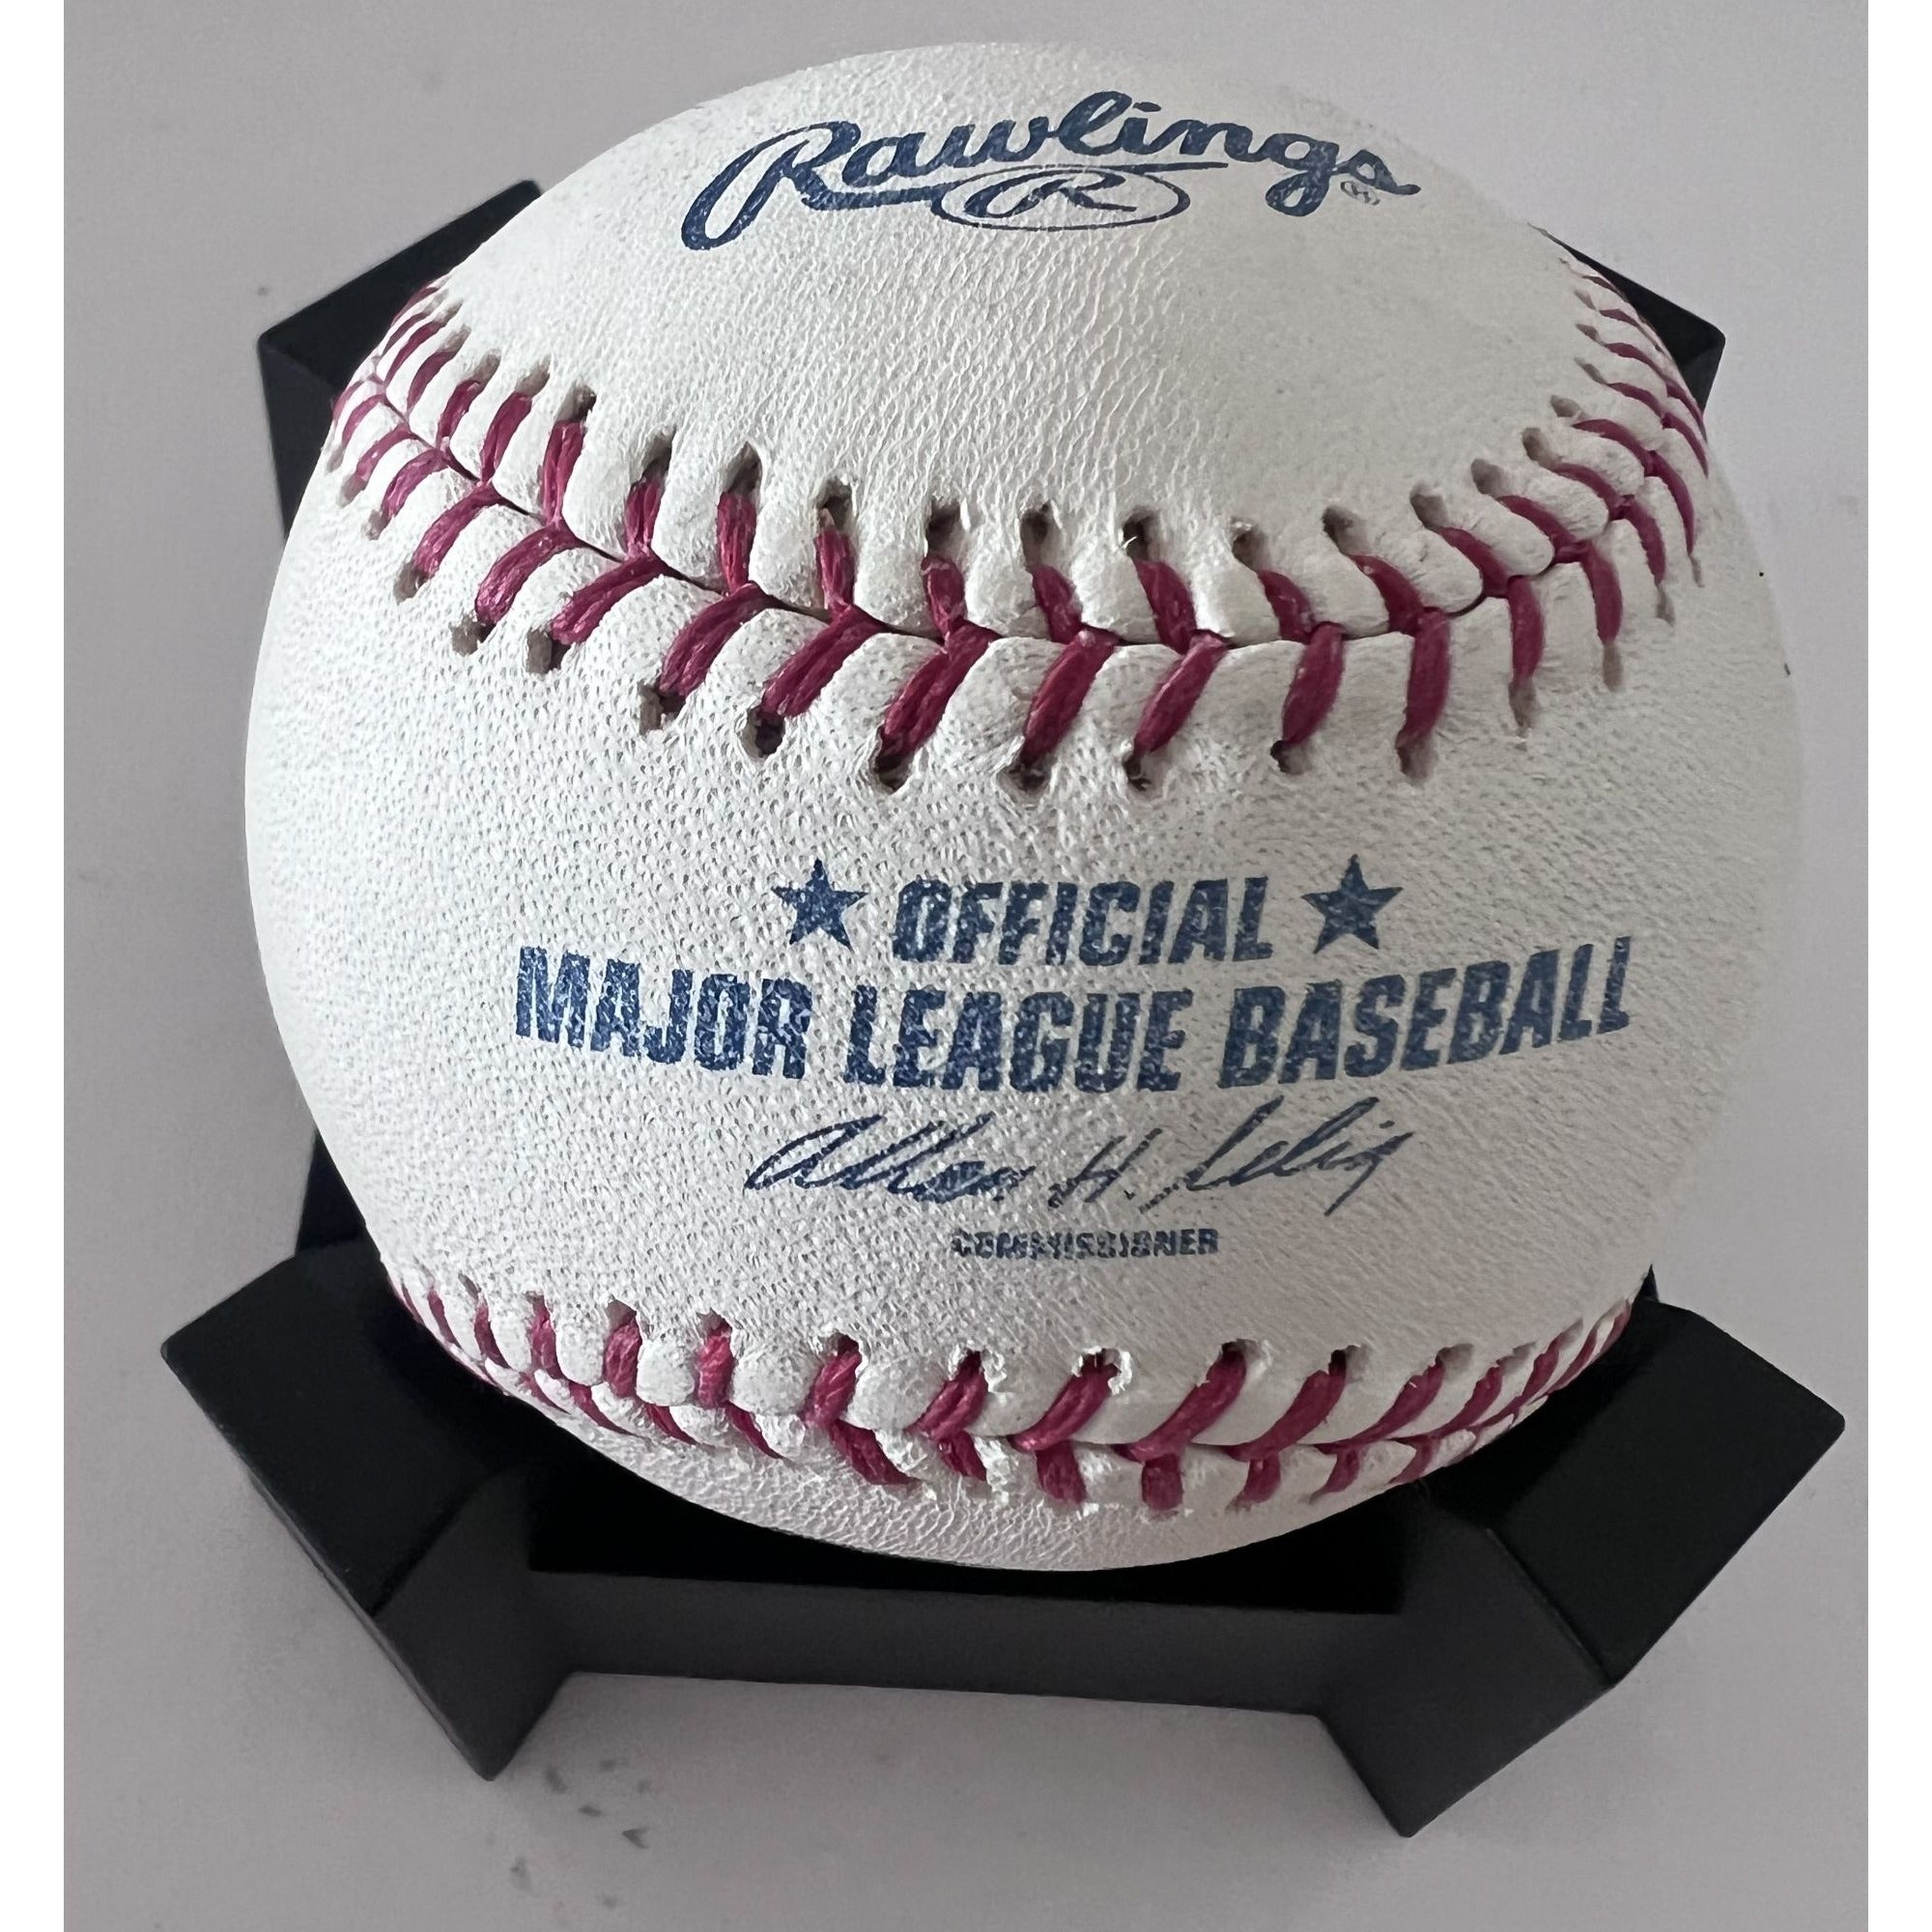 President Barack Obama Rawlings official MLB baseball signed with proof